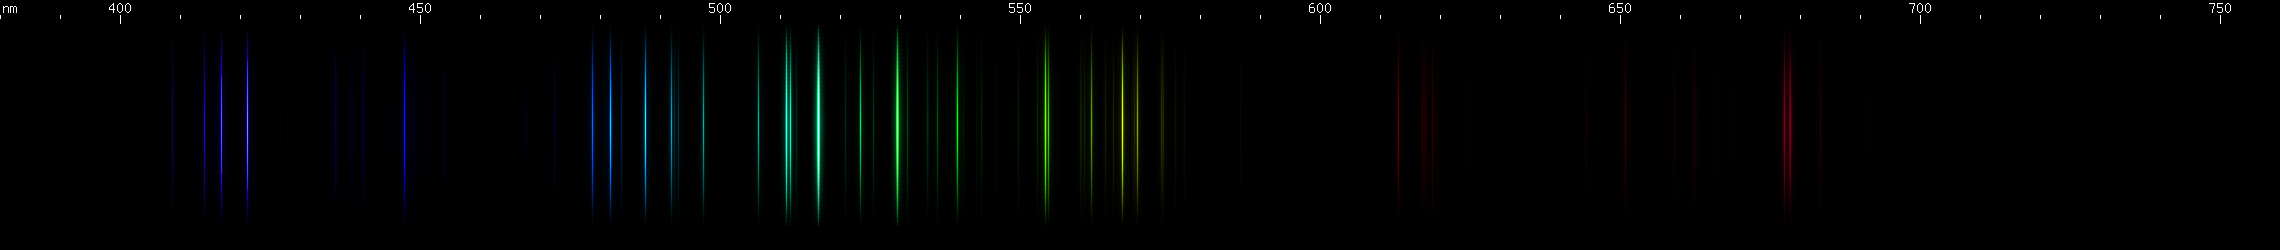 Spectral Lines of Palladium